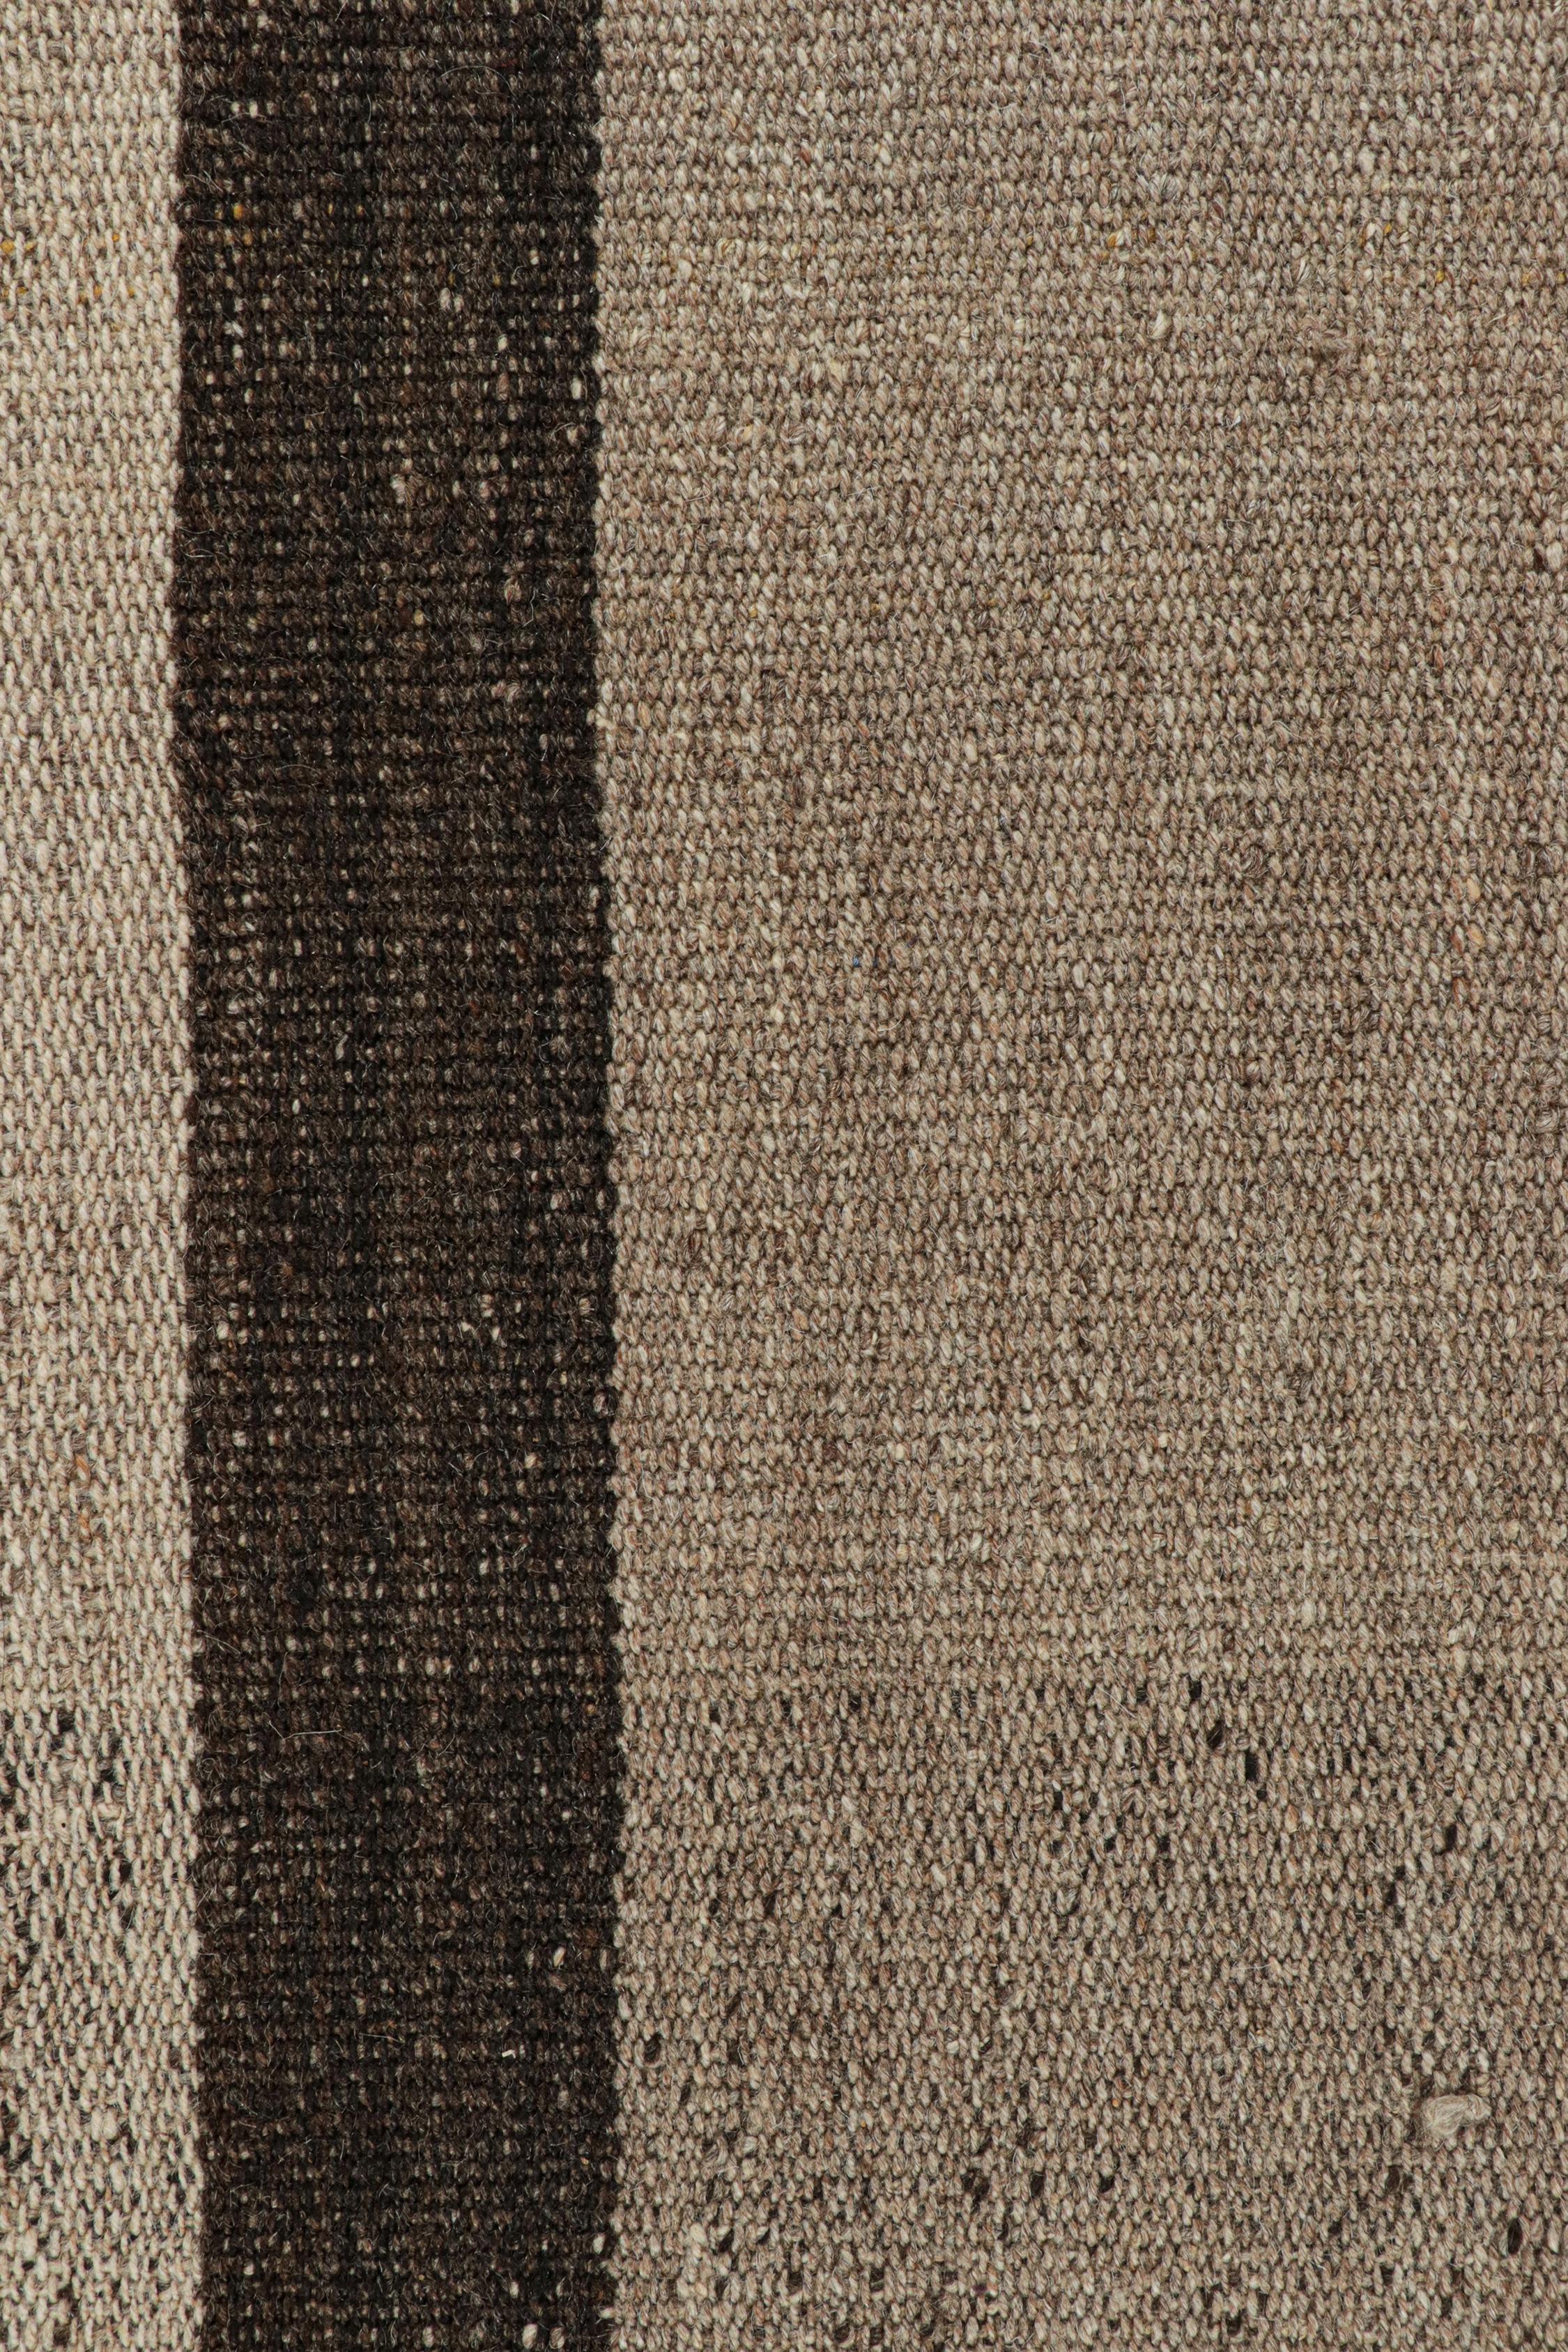 Wool Vintage Persian Kilim in Beige with Brown Stripes by Rug & Kilim For Sale